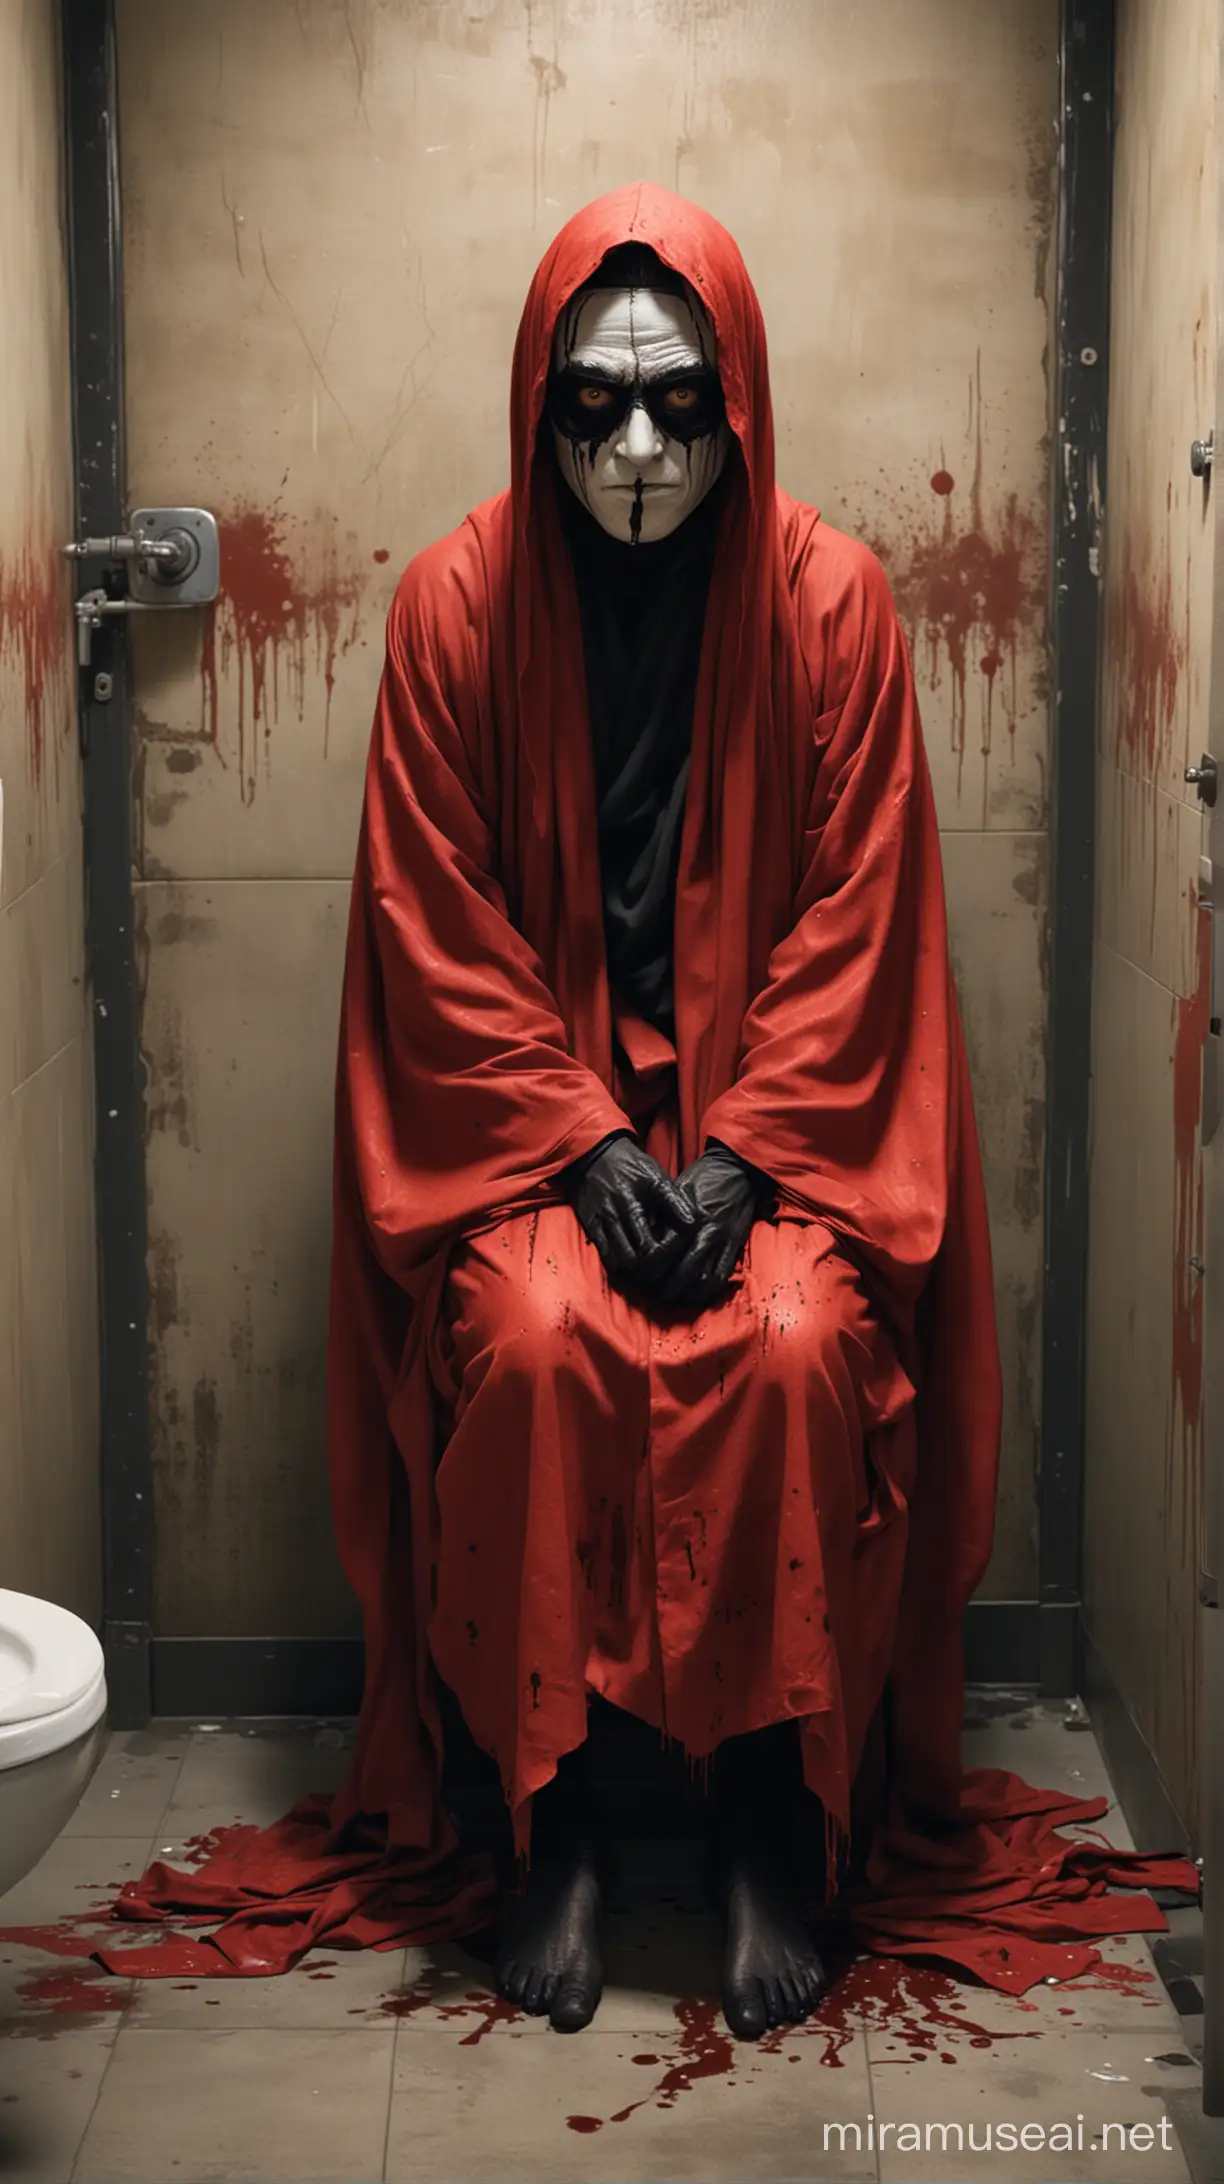 Eerie Urban Legend Depiction Manto Spirit in BloodStained Public Bathroom